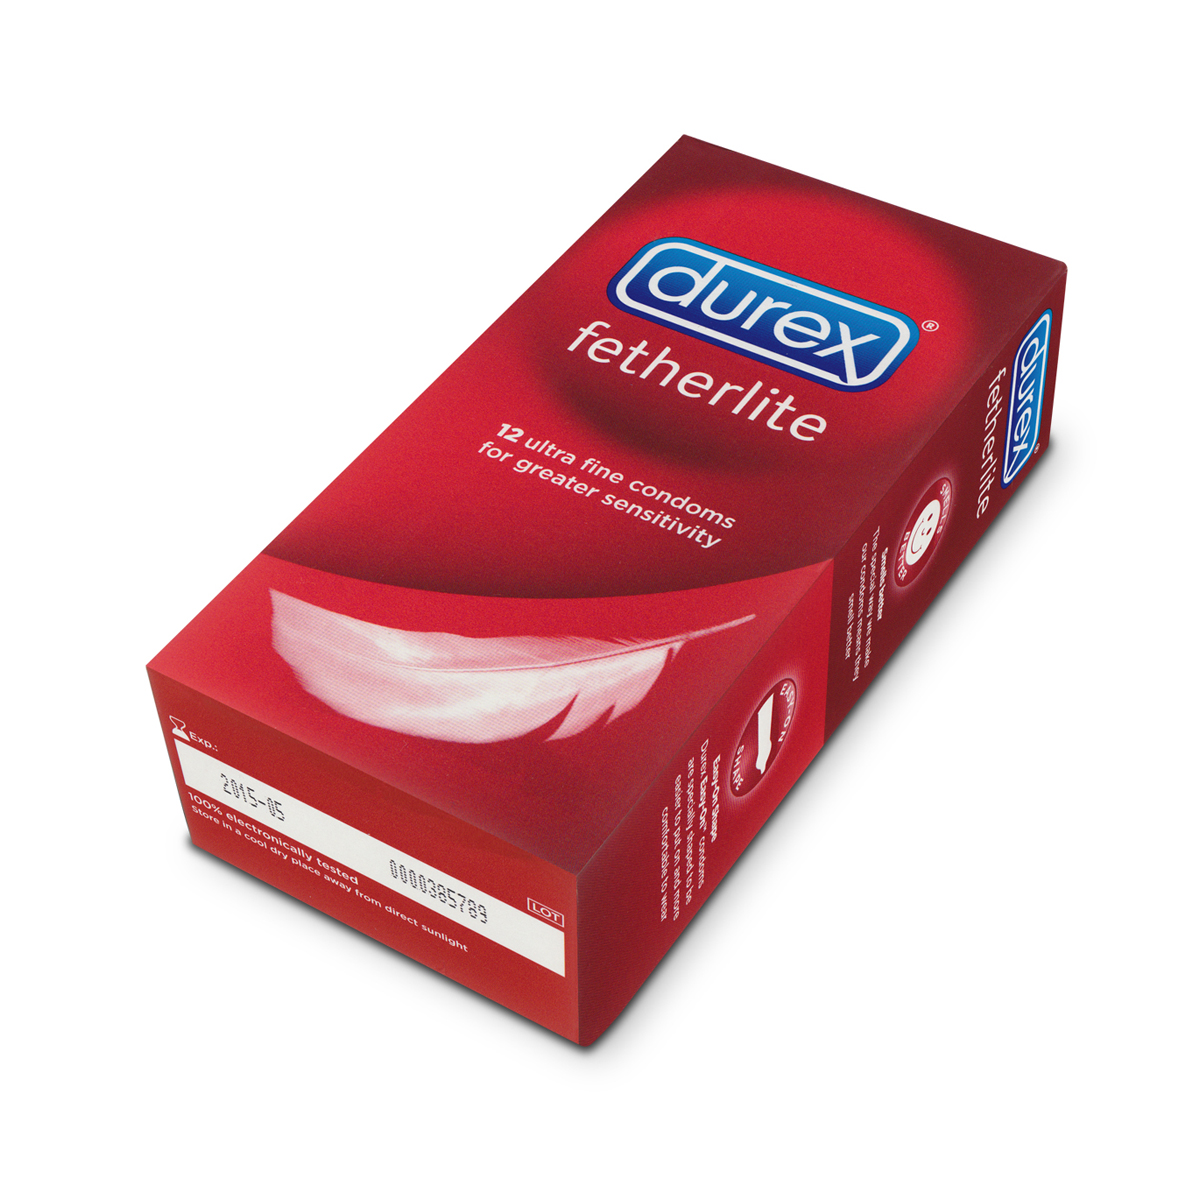 Durex Pack of 12 Fetherlite Condoms